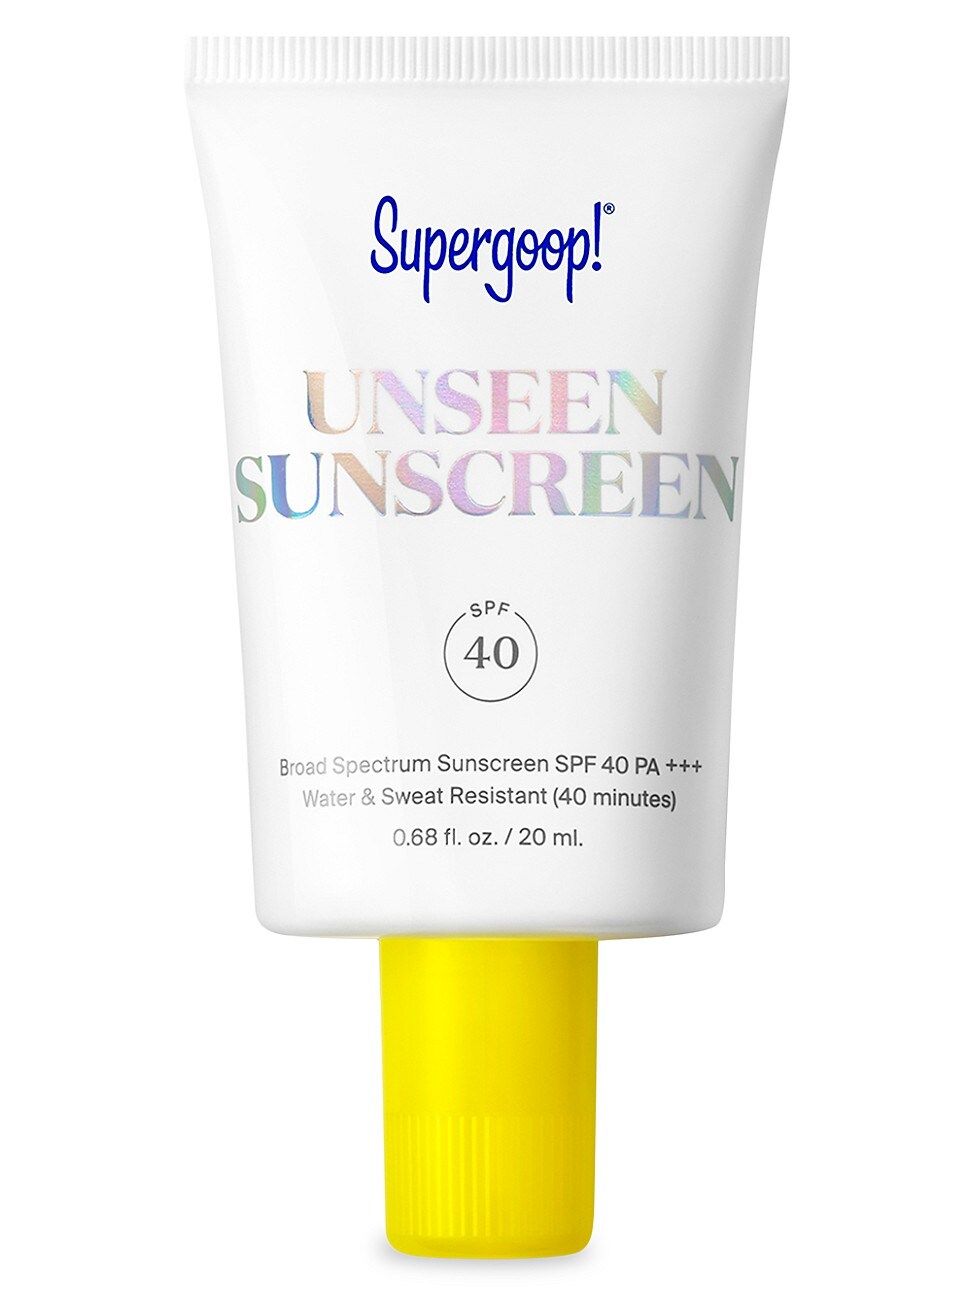 Unseen Sunscreen Broad Spectrum Sunscreen SPF 40 PA+++ | Saks Fifth Avenue